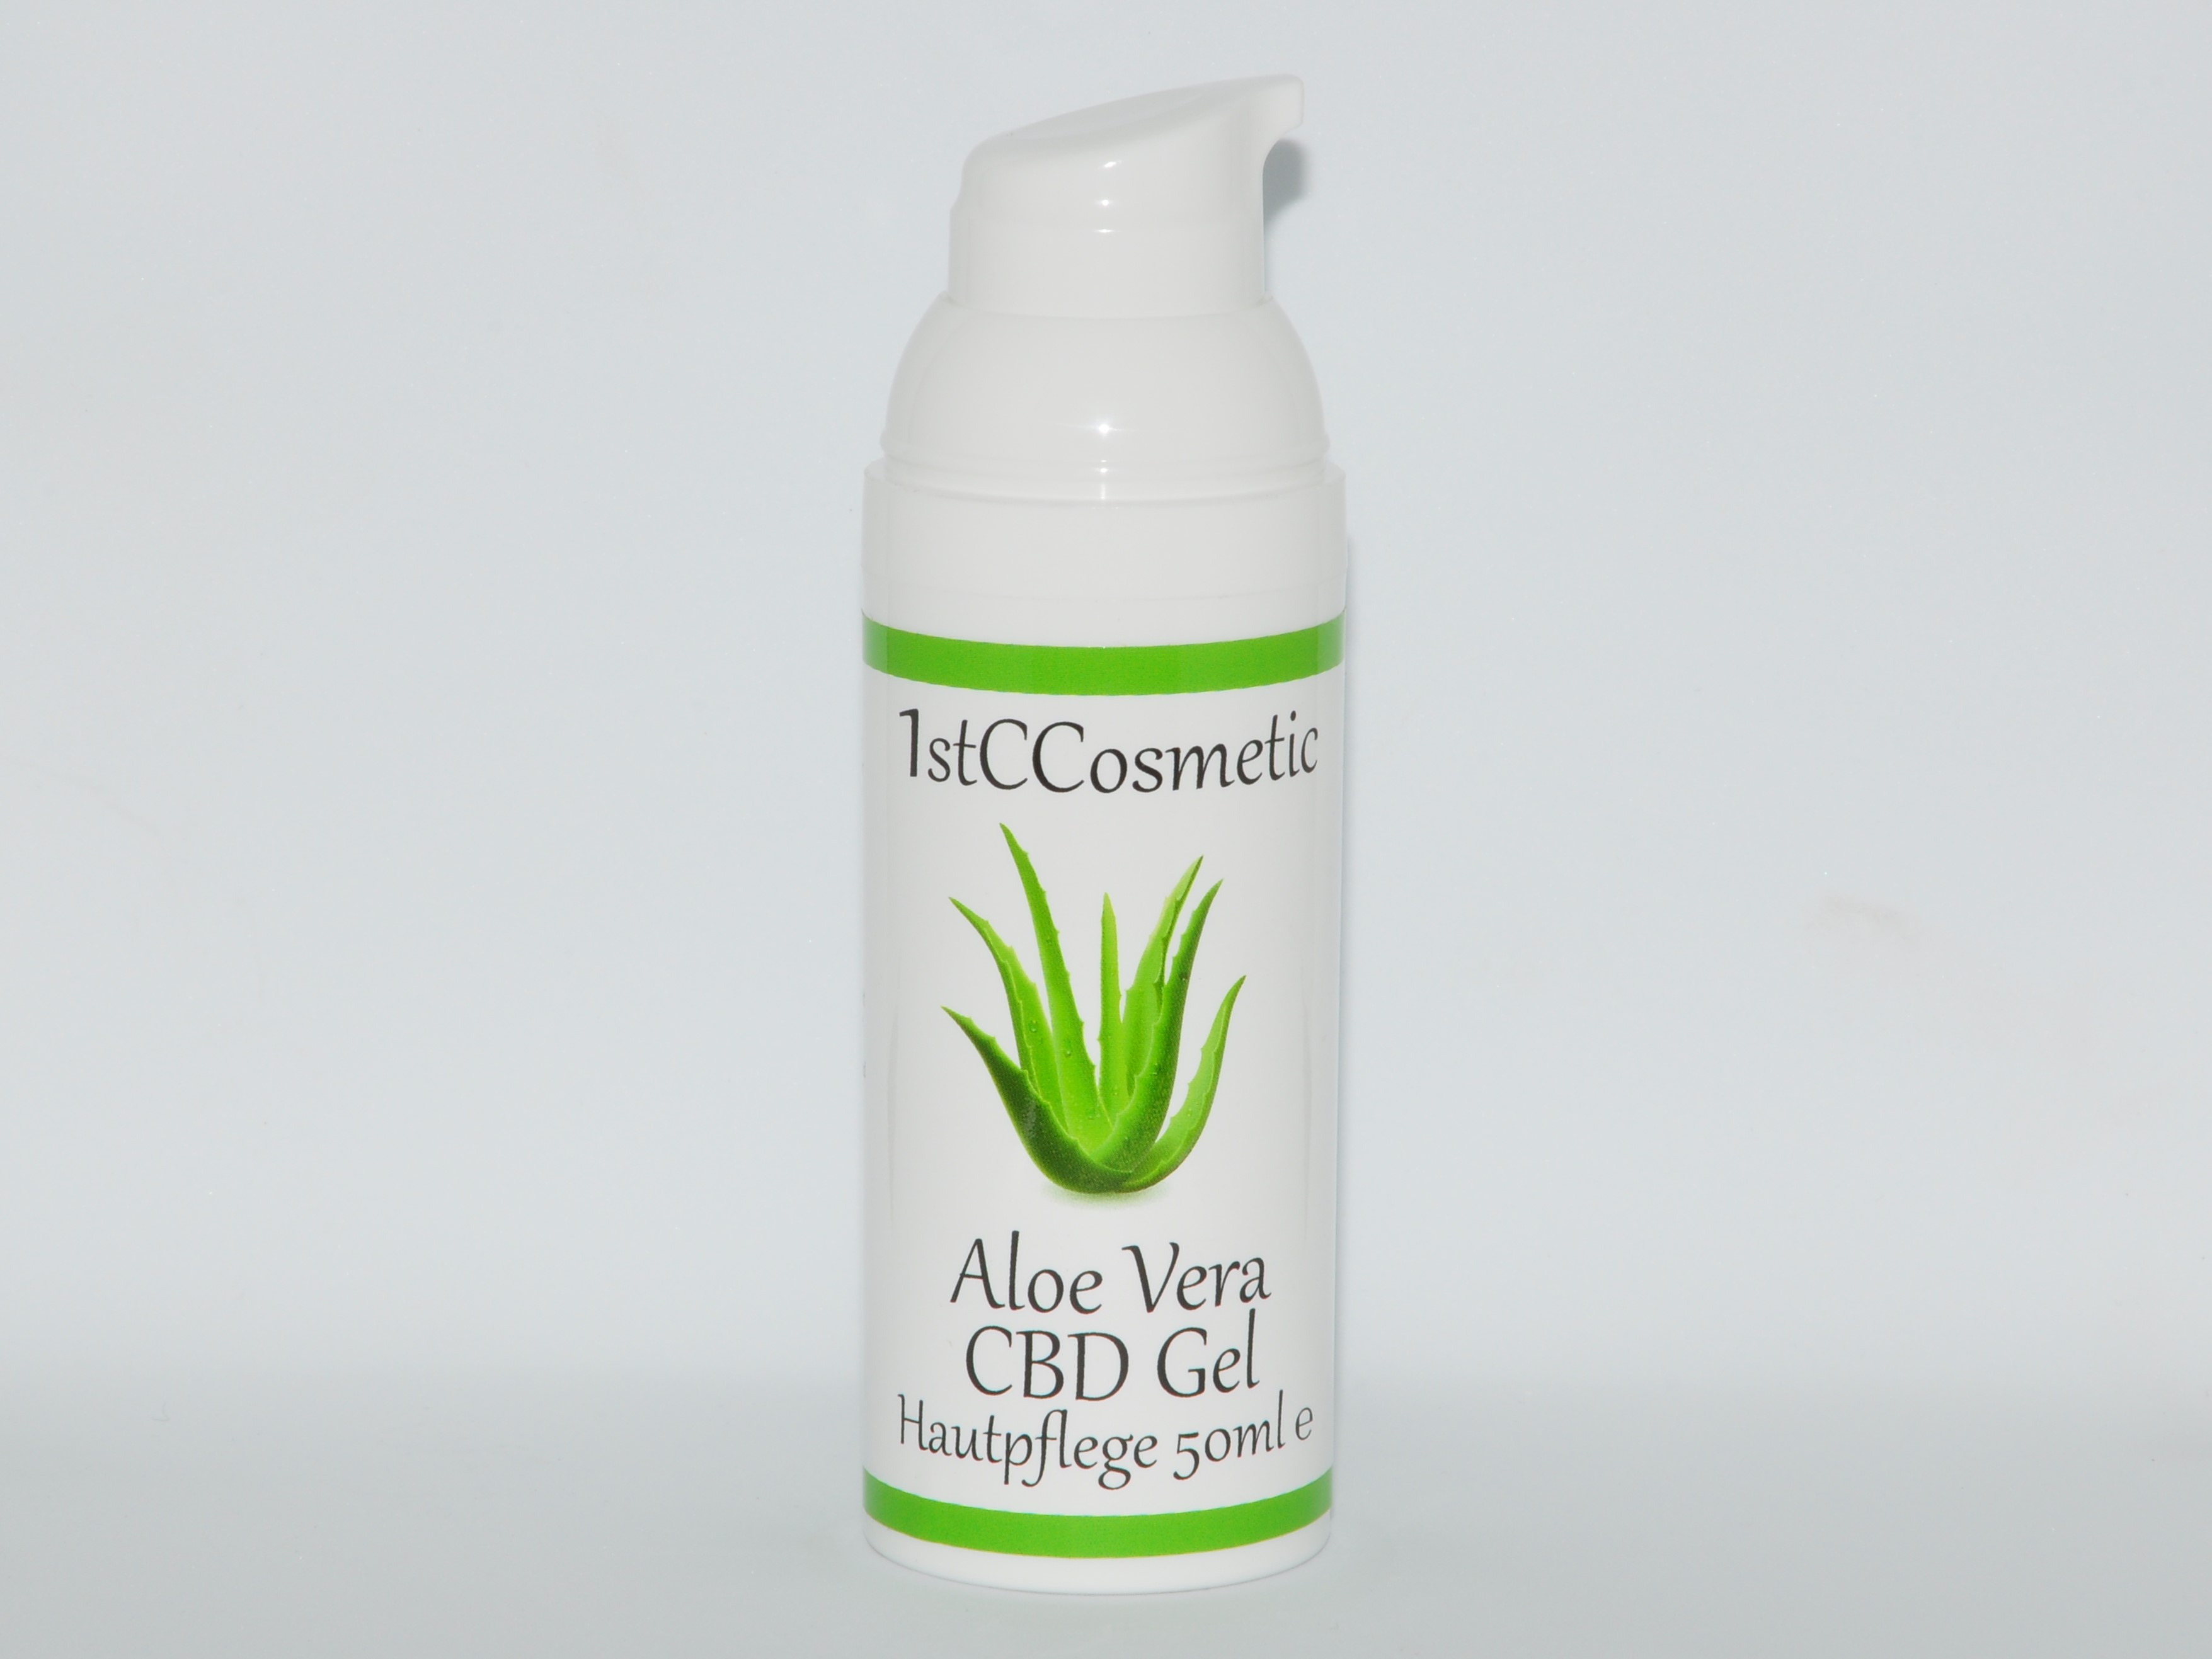 1stCCosmetic Aloe Vera CBD Gel